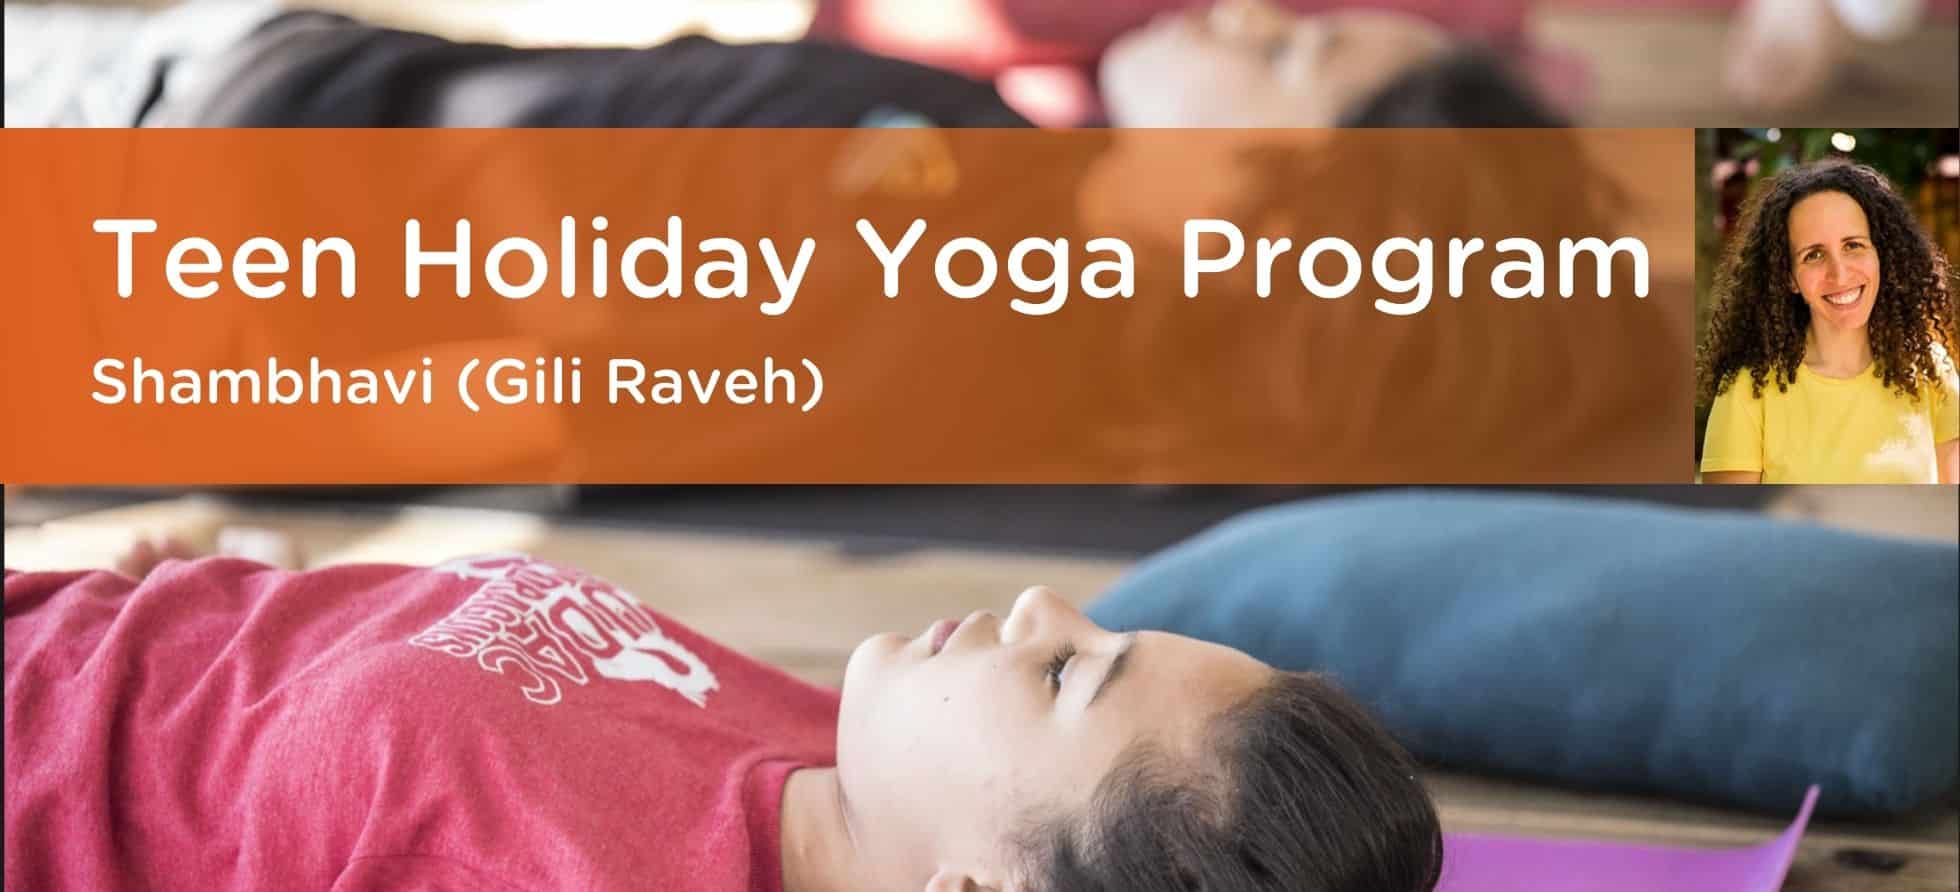 Teen Holiday Yoga Program